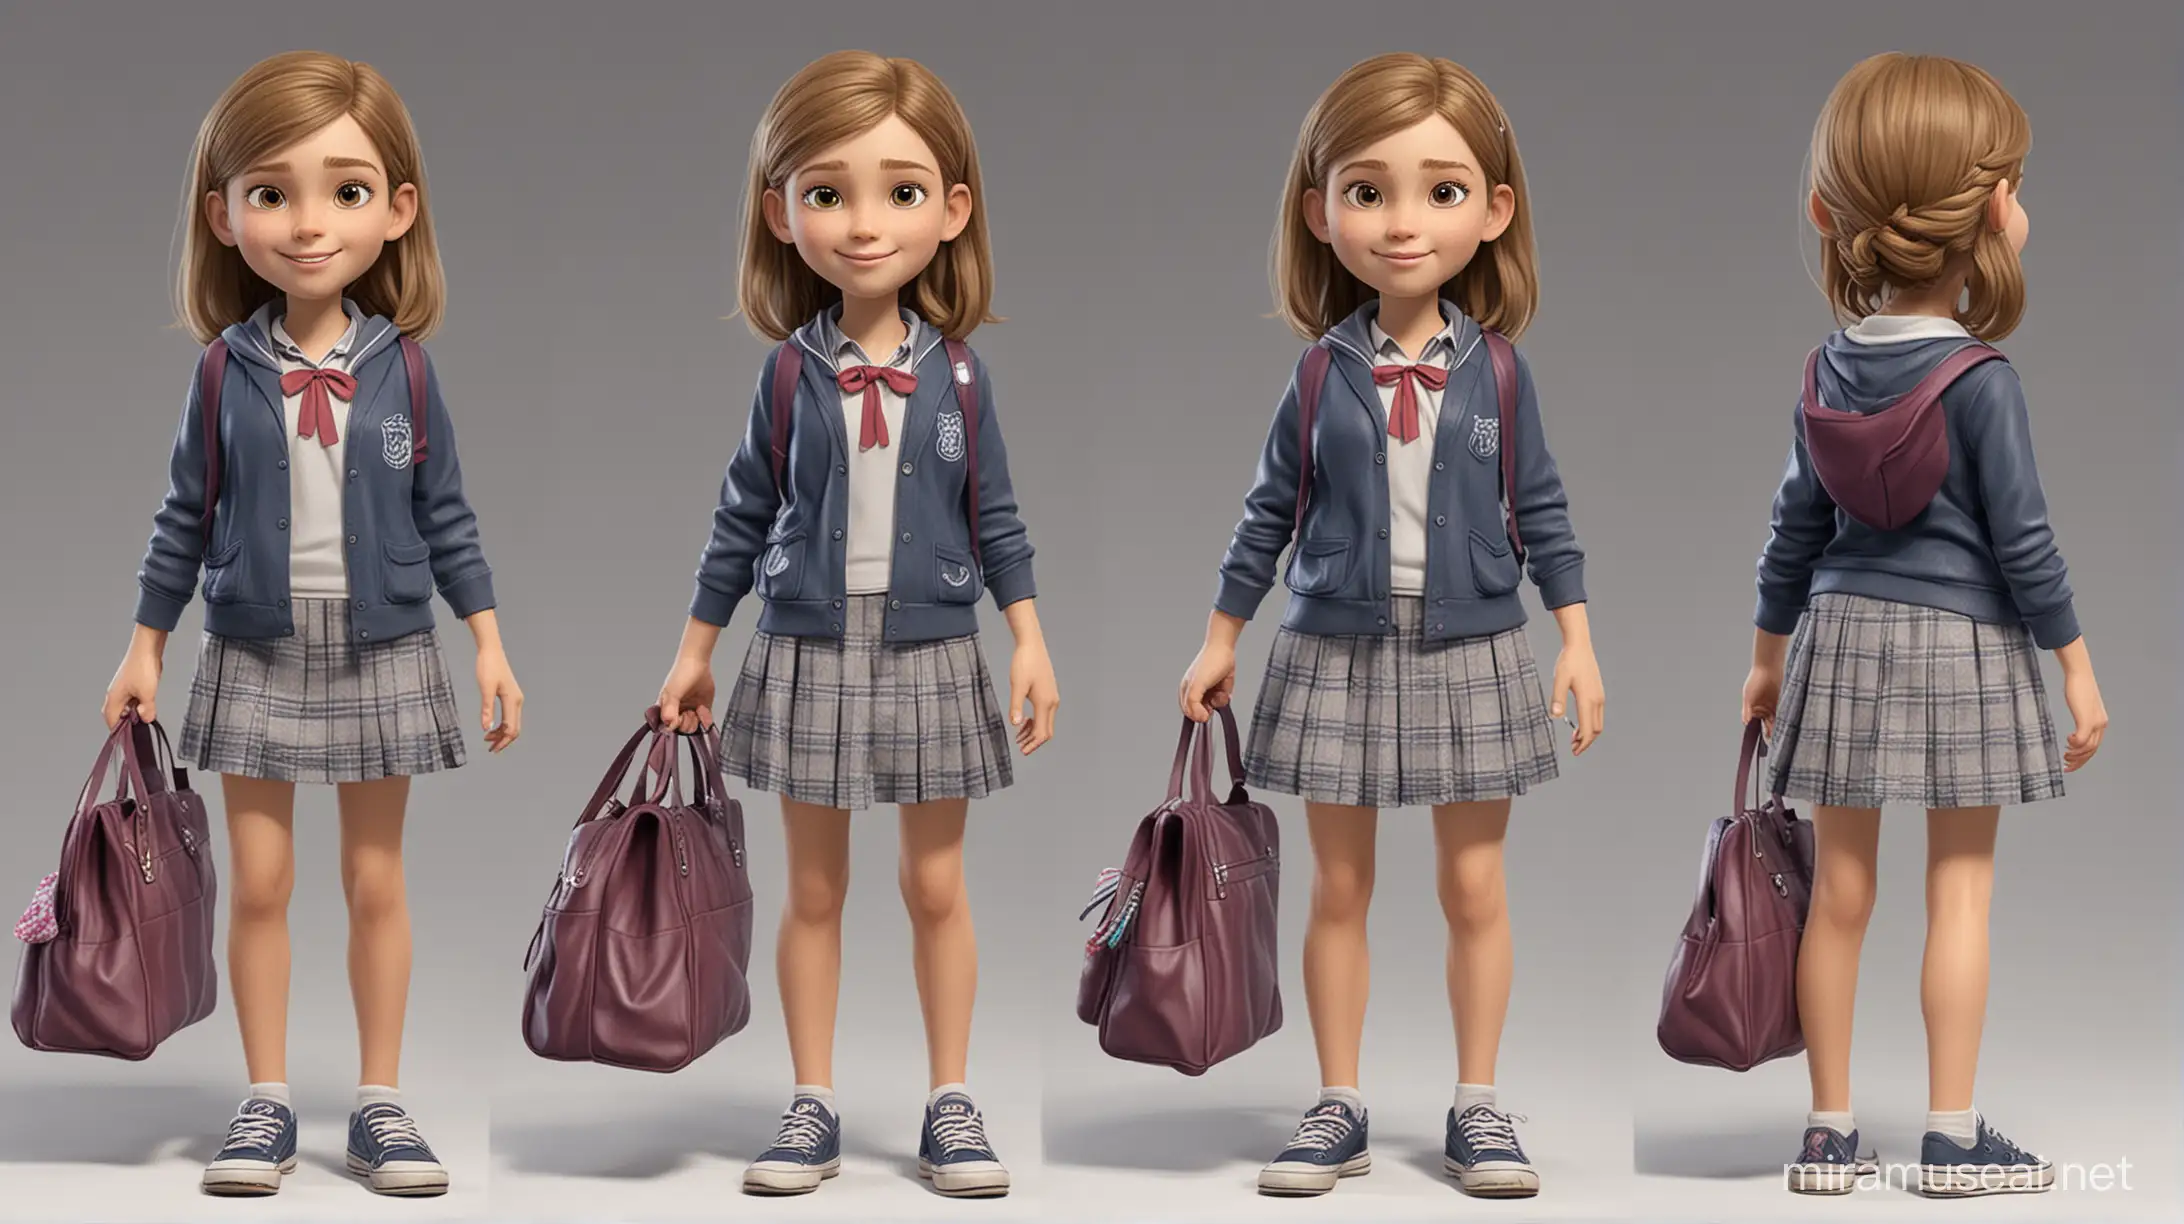 EightYearOld Girl in School Uniform with Backpack